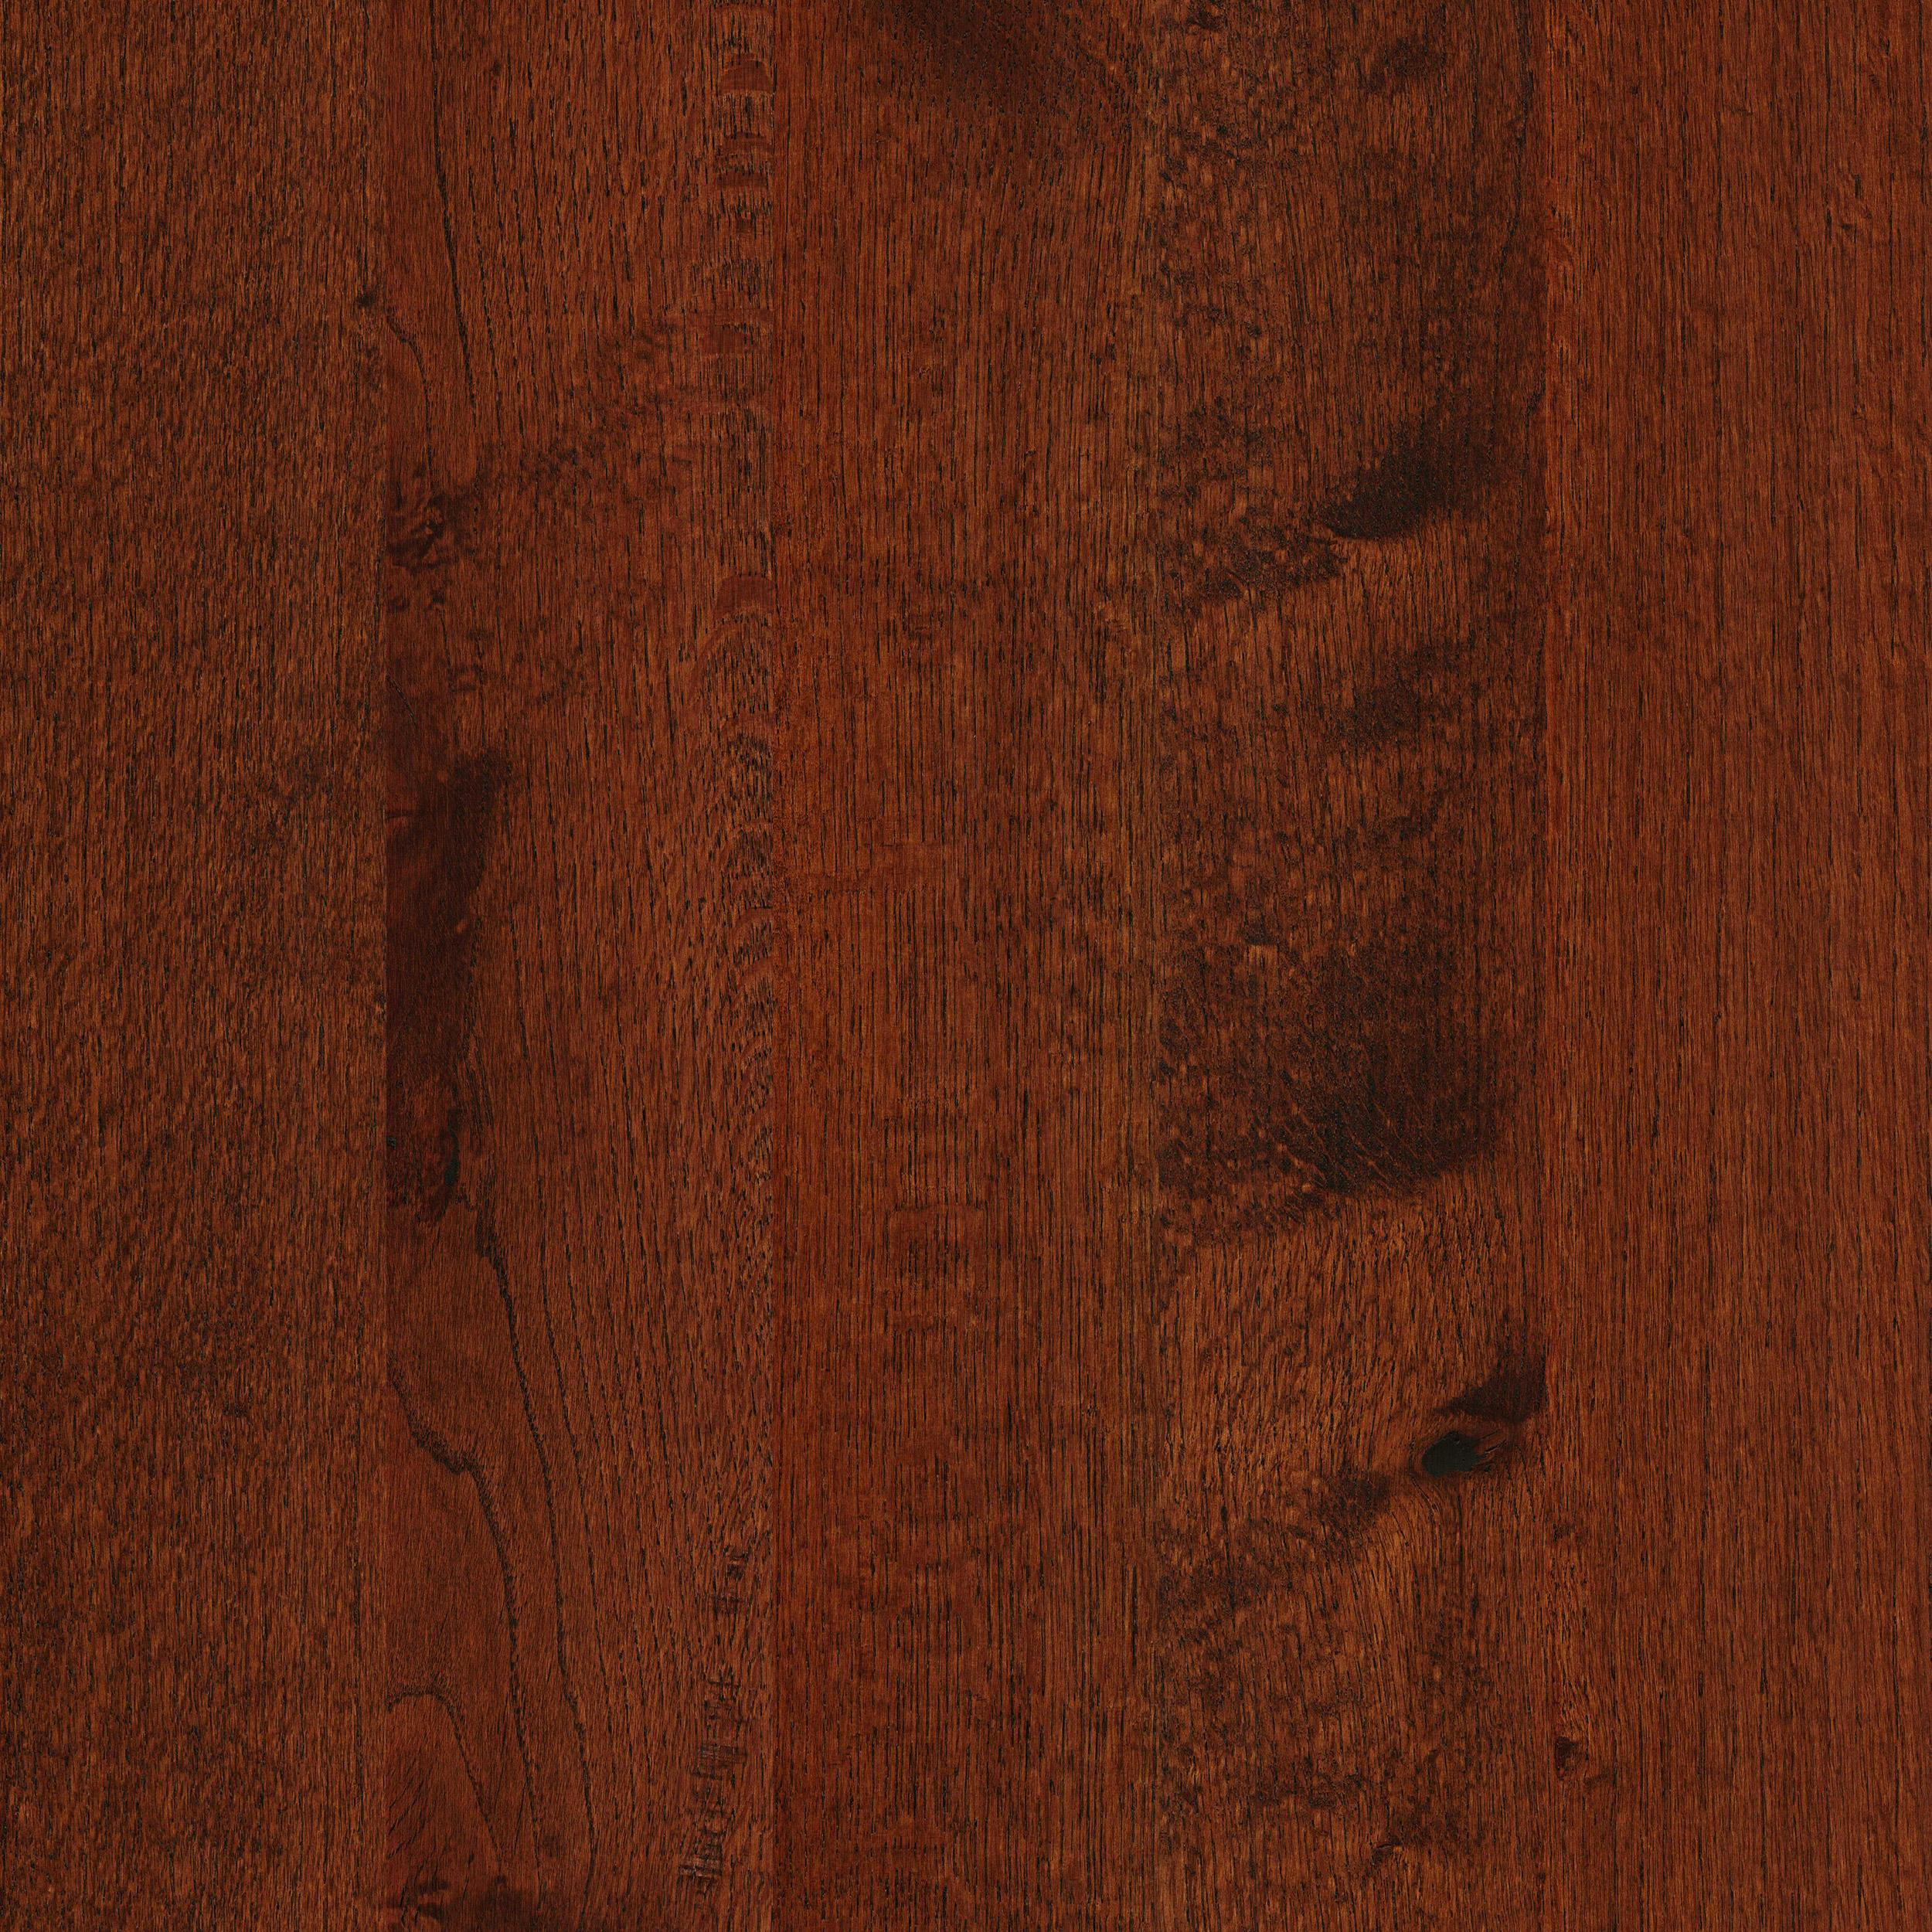 3 4 inch hardwood flooring unfinished of timber hardwood red oak sorrell 5 wide solid hardwood flooring regarding red oak sorrell timber solid approved bk